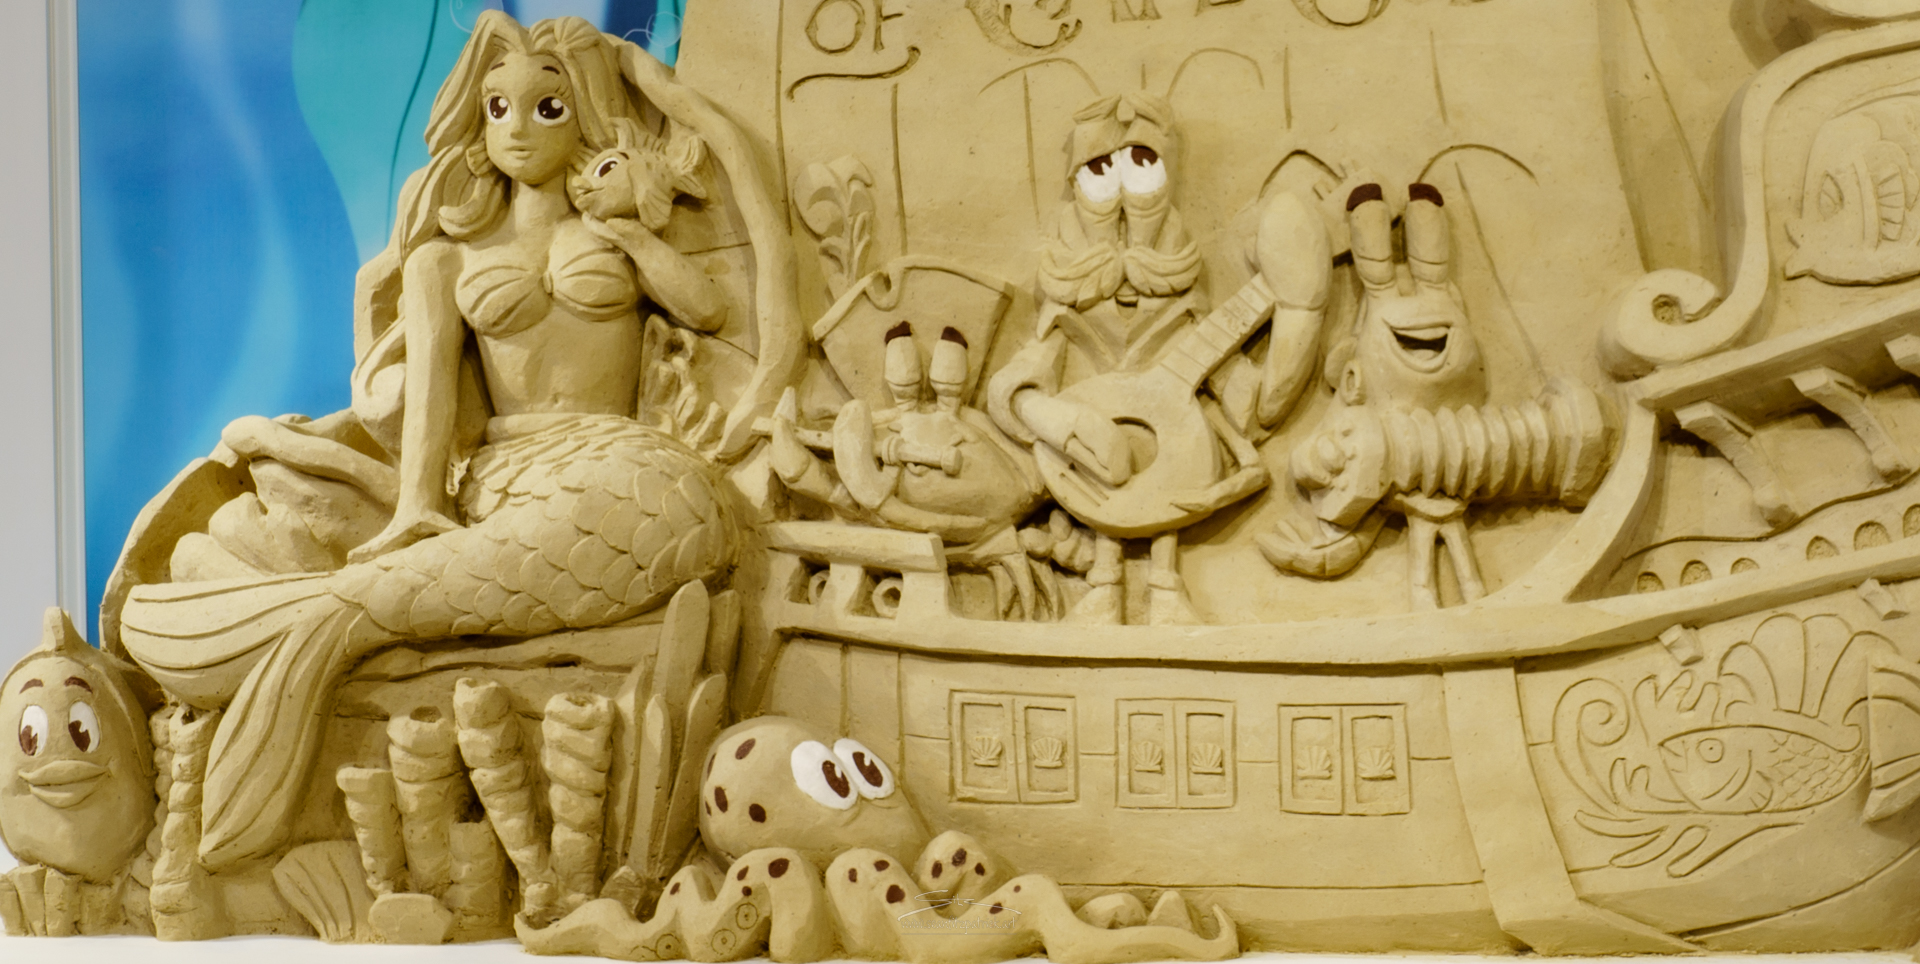  Sand Sculpting Displays